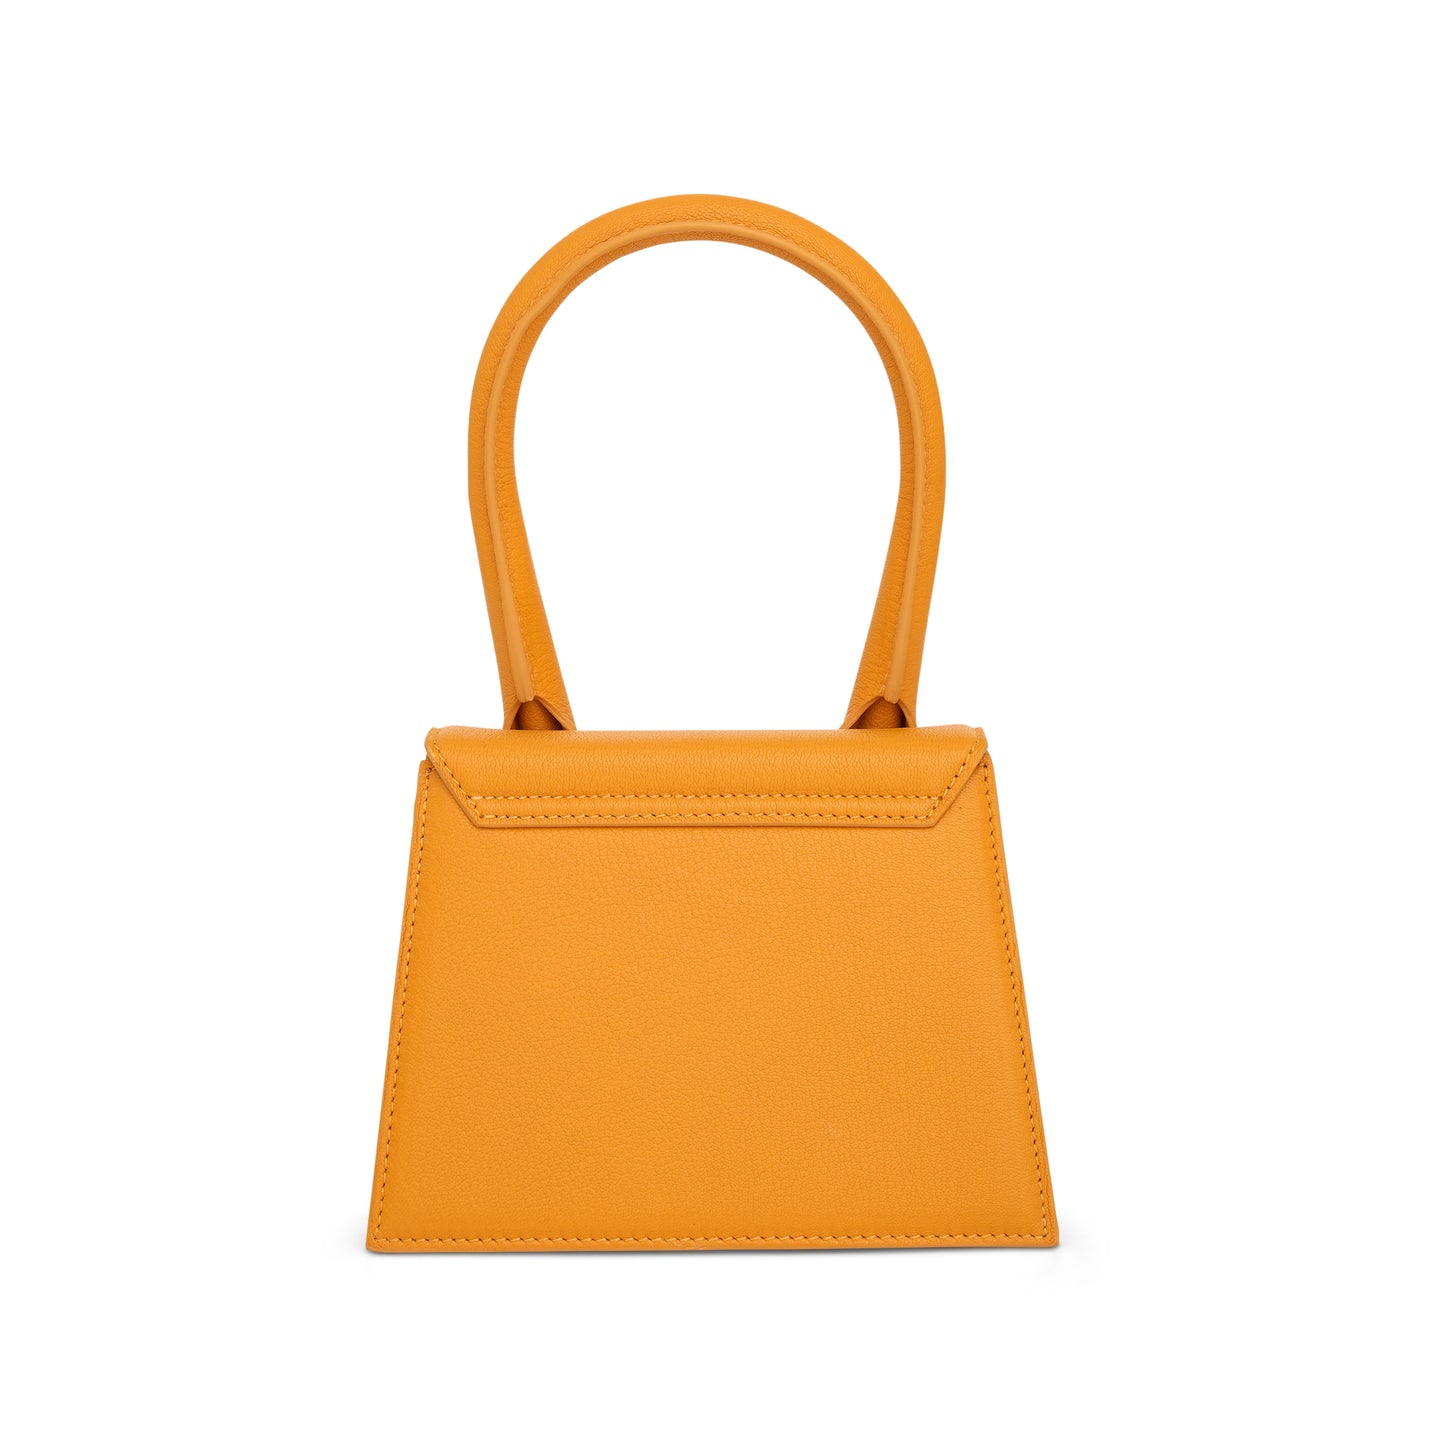 Le Chiquito Moyen Leather Bag in Dark Orange